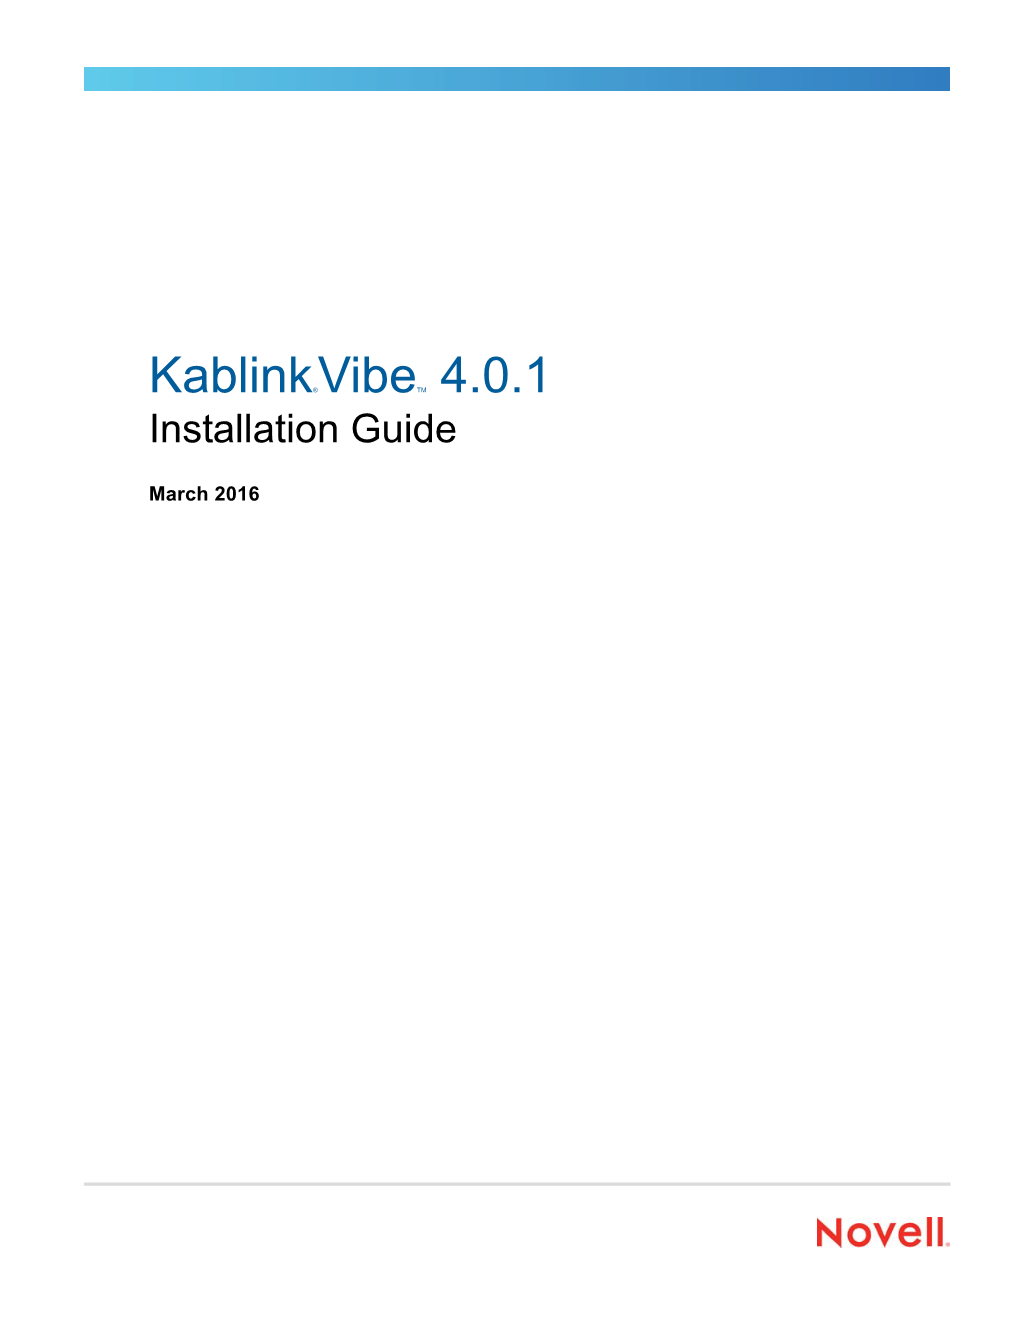 Kablink Vibe 4.0.1 Installation Guide 6.2.1 Performing Pre-Installation Tasks on Windows